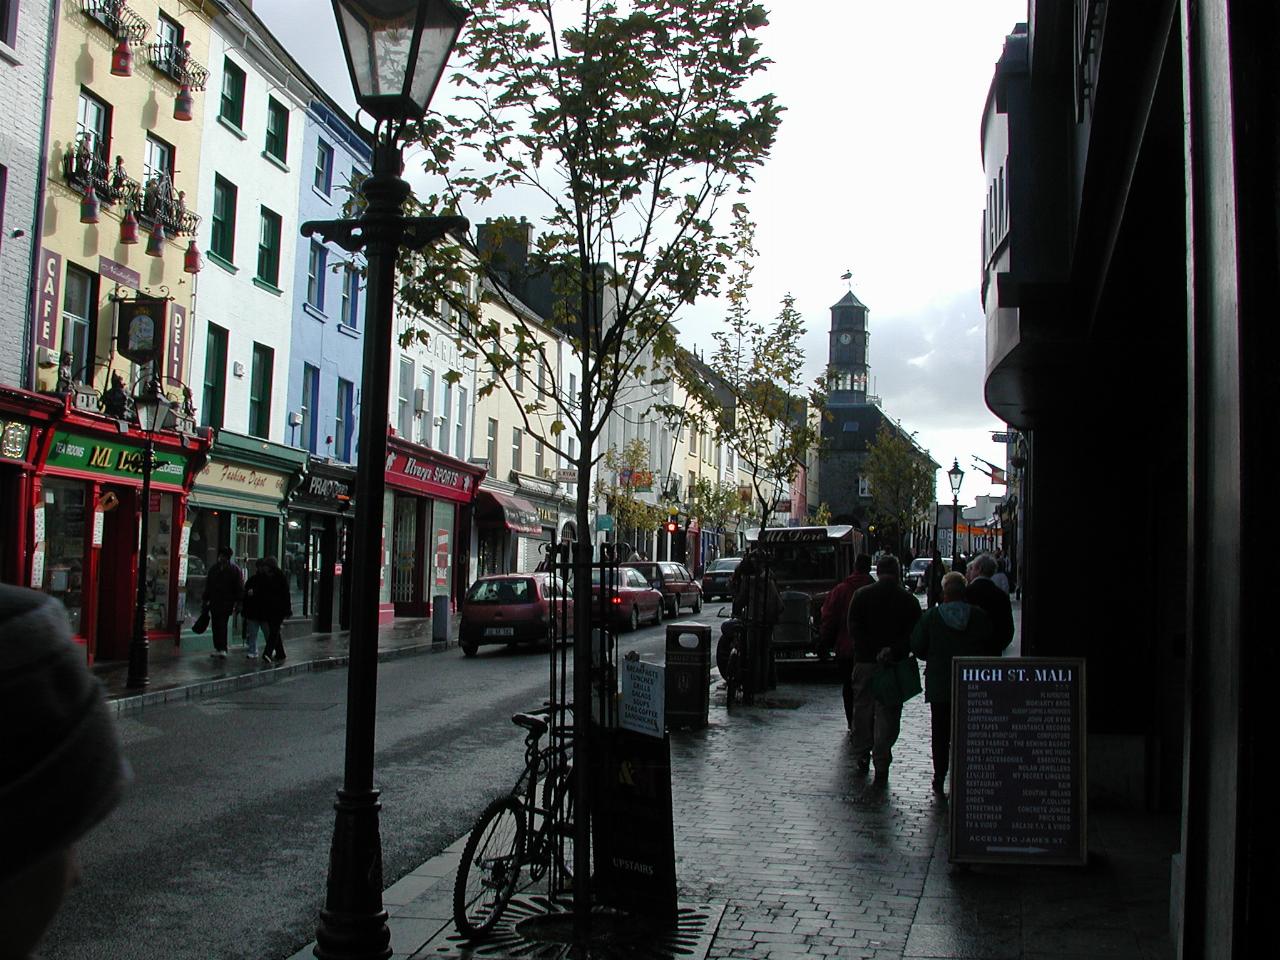 Downtown Kilkenny (Parliament St.)